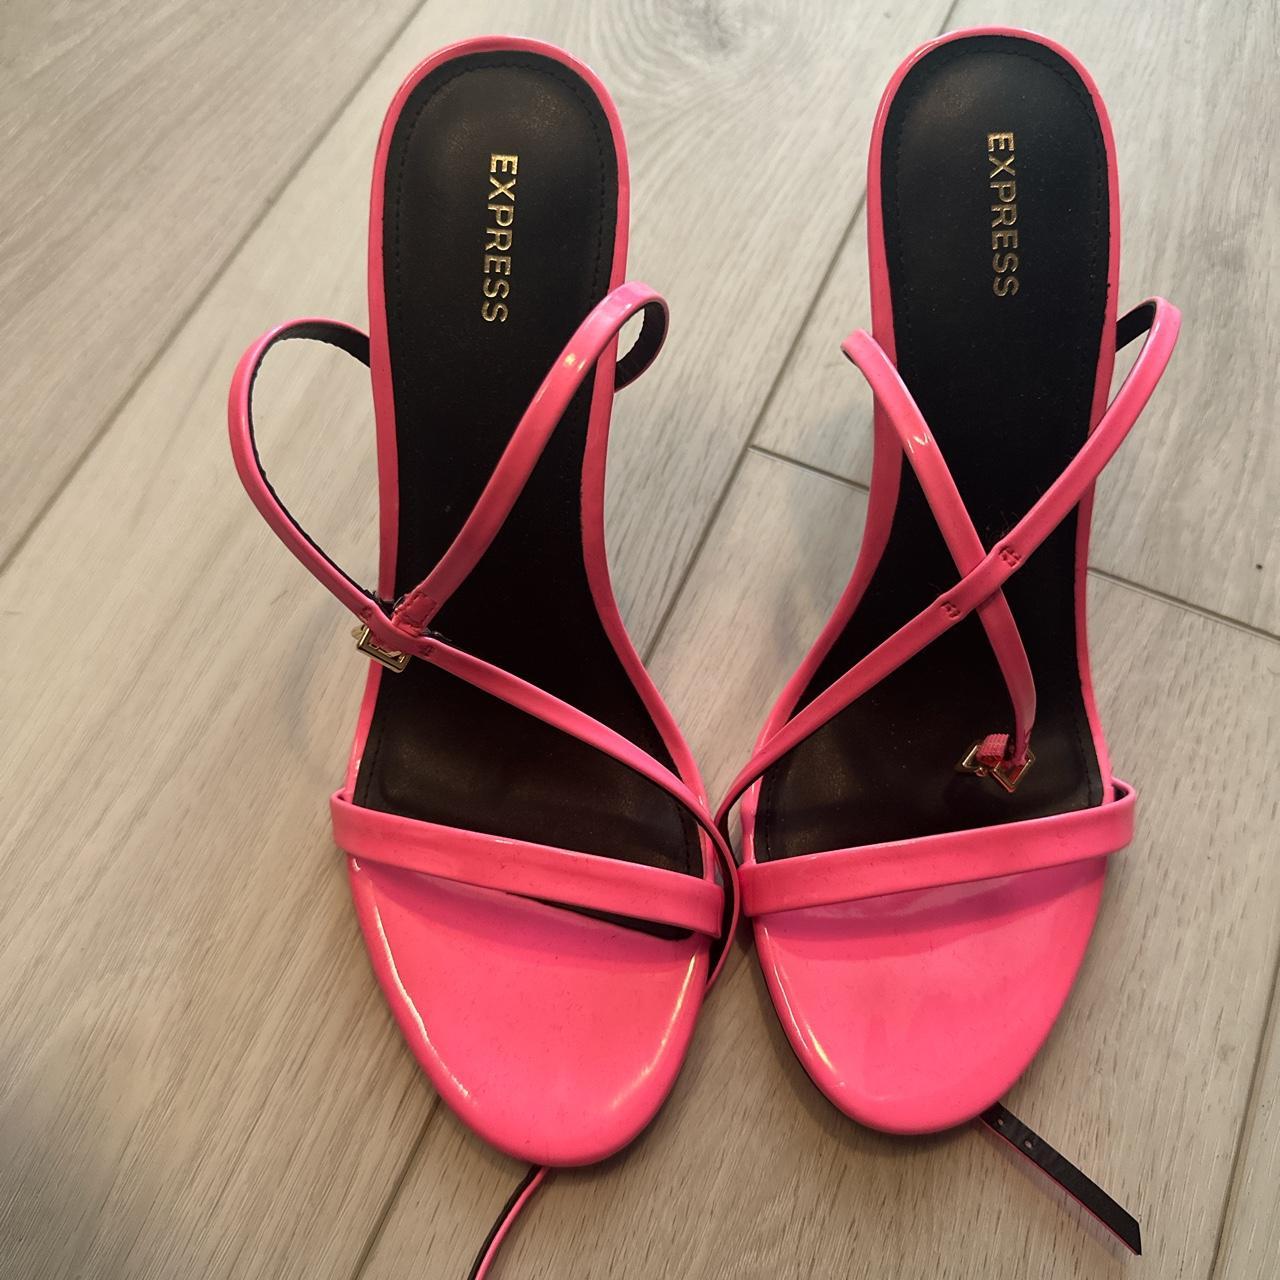 Ankle strap express heels hot pink size 10 Worn twice - Depop